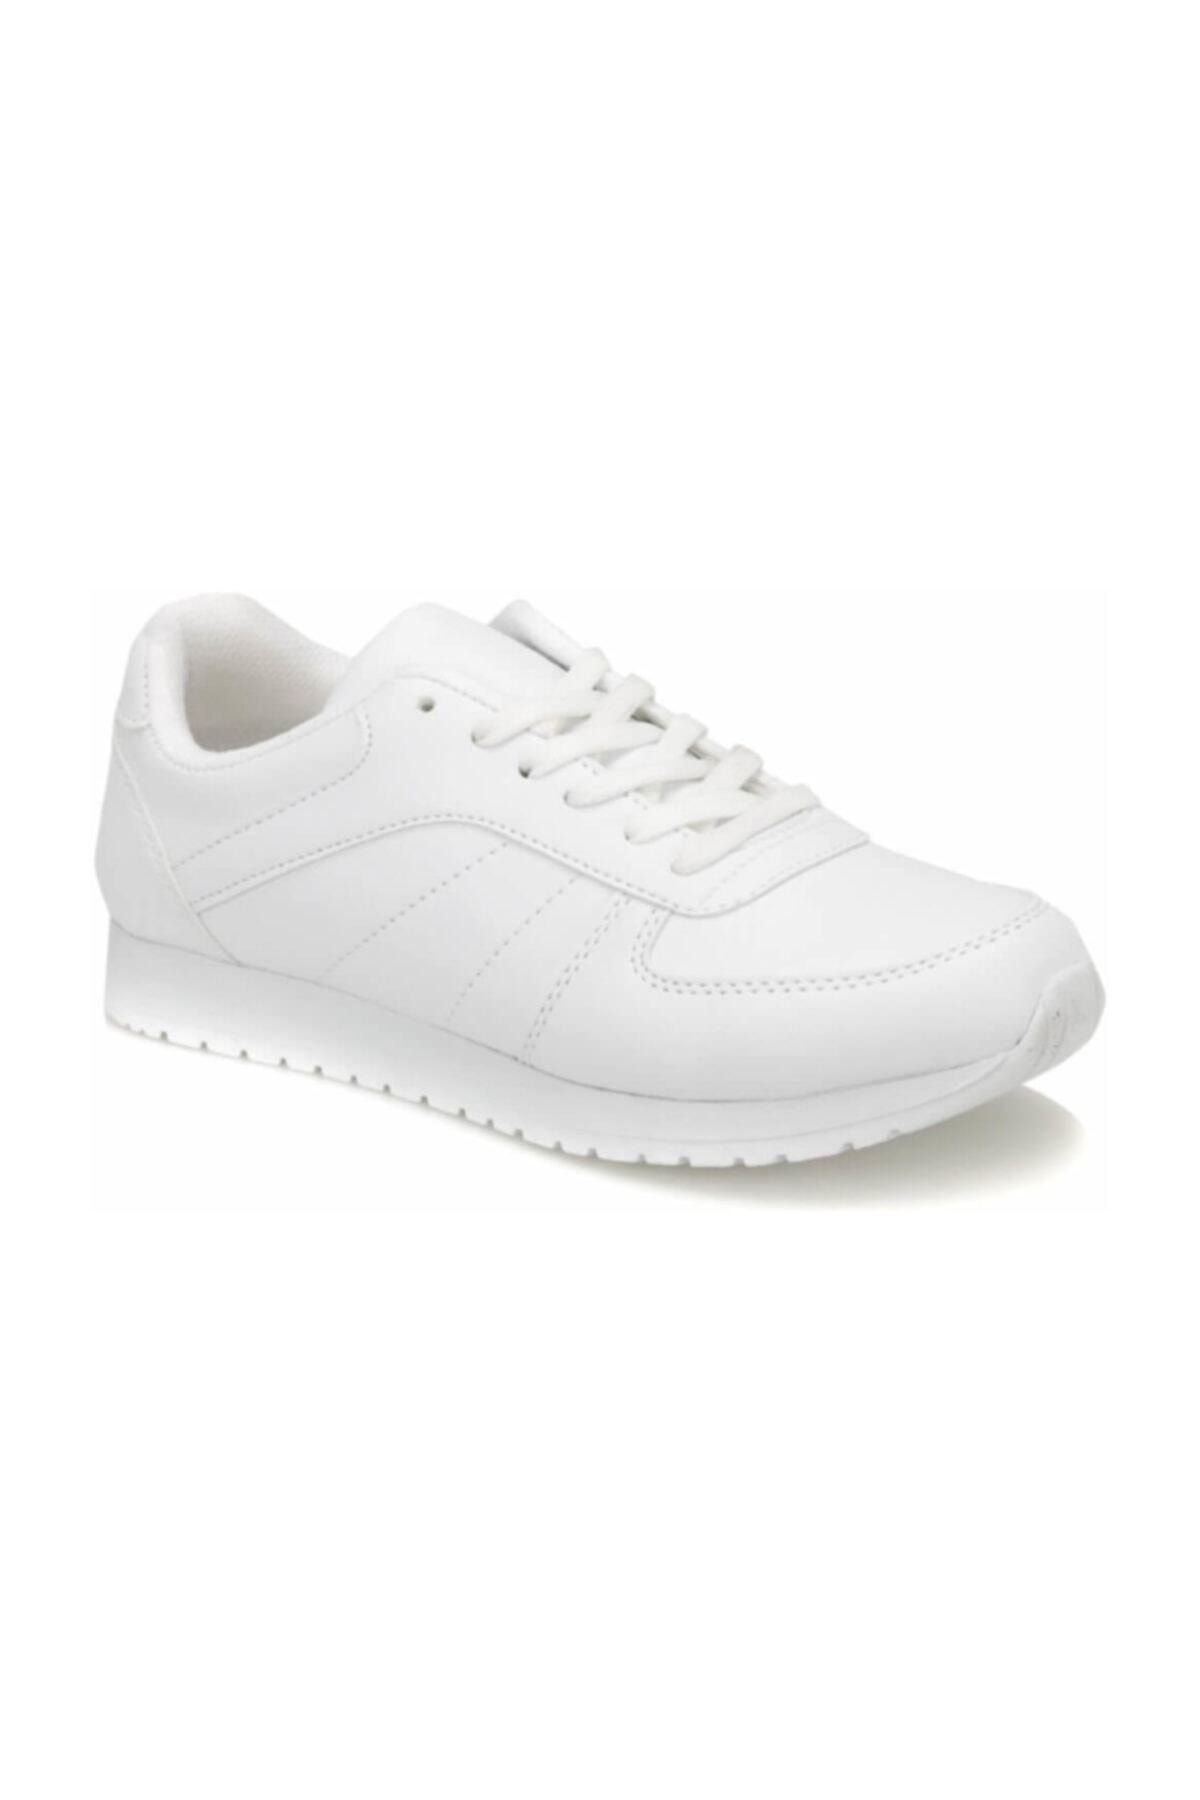 Torex DARIO W Beyaz Kadın Sneaker 100318039